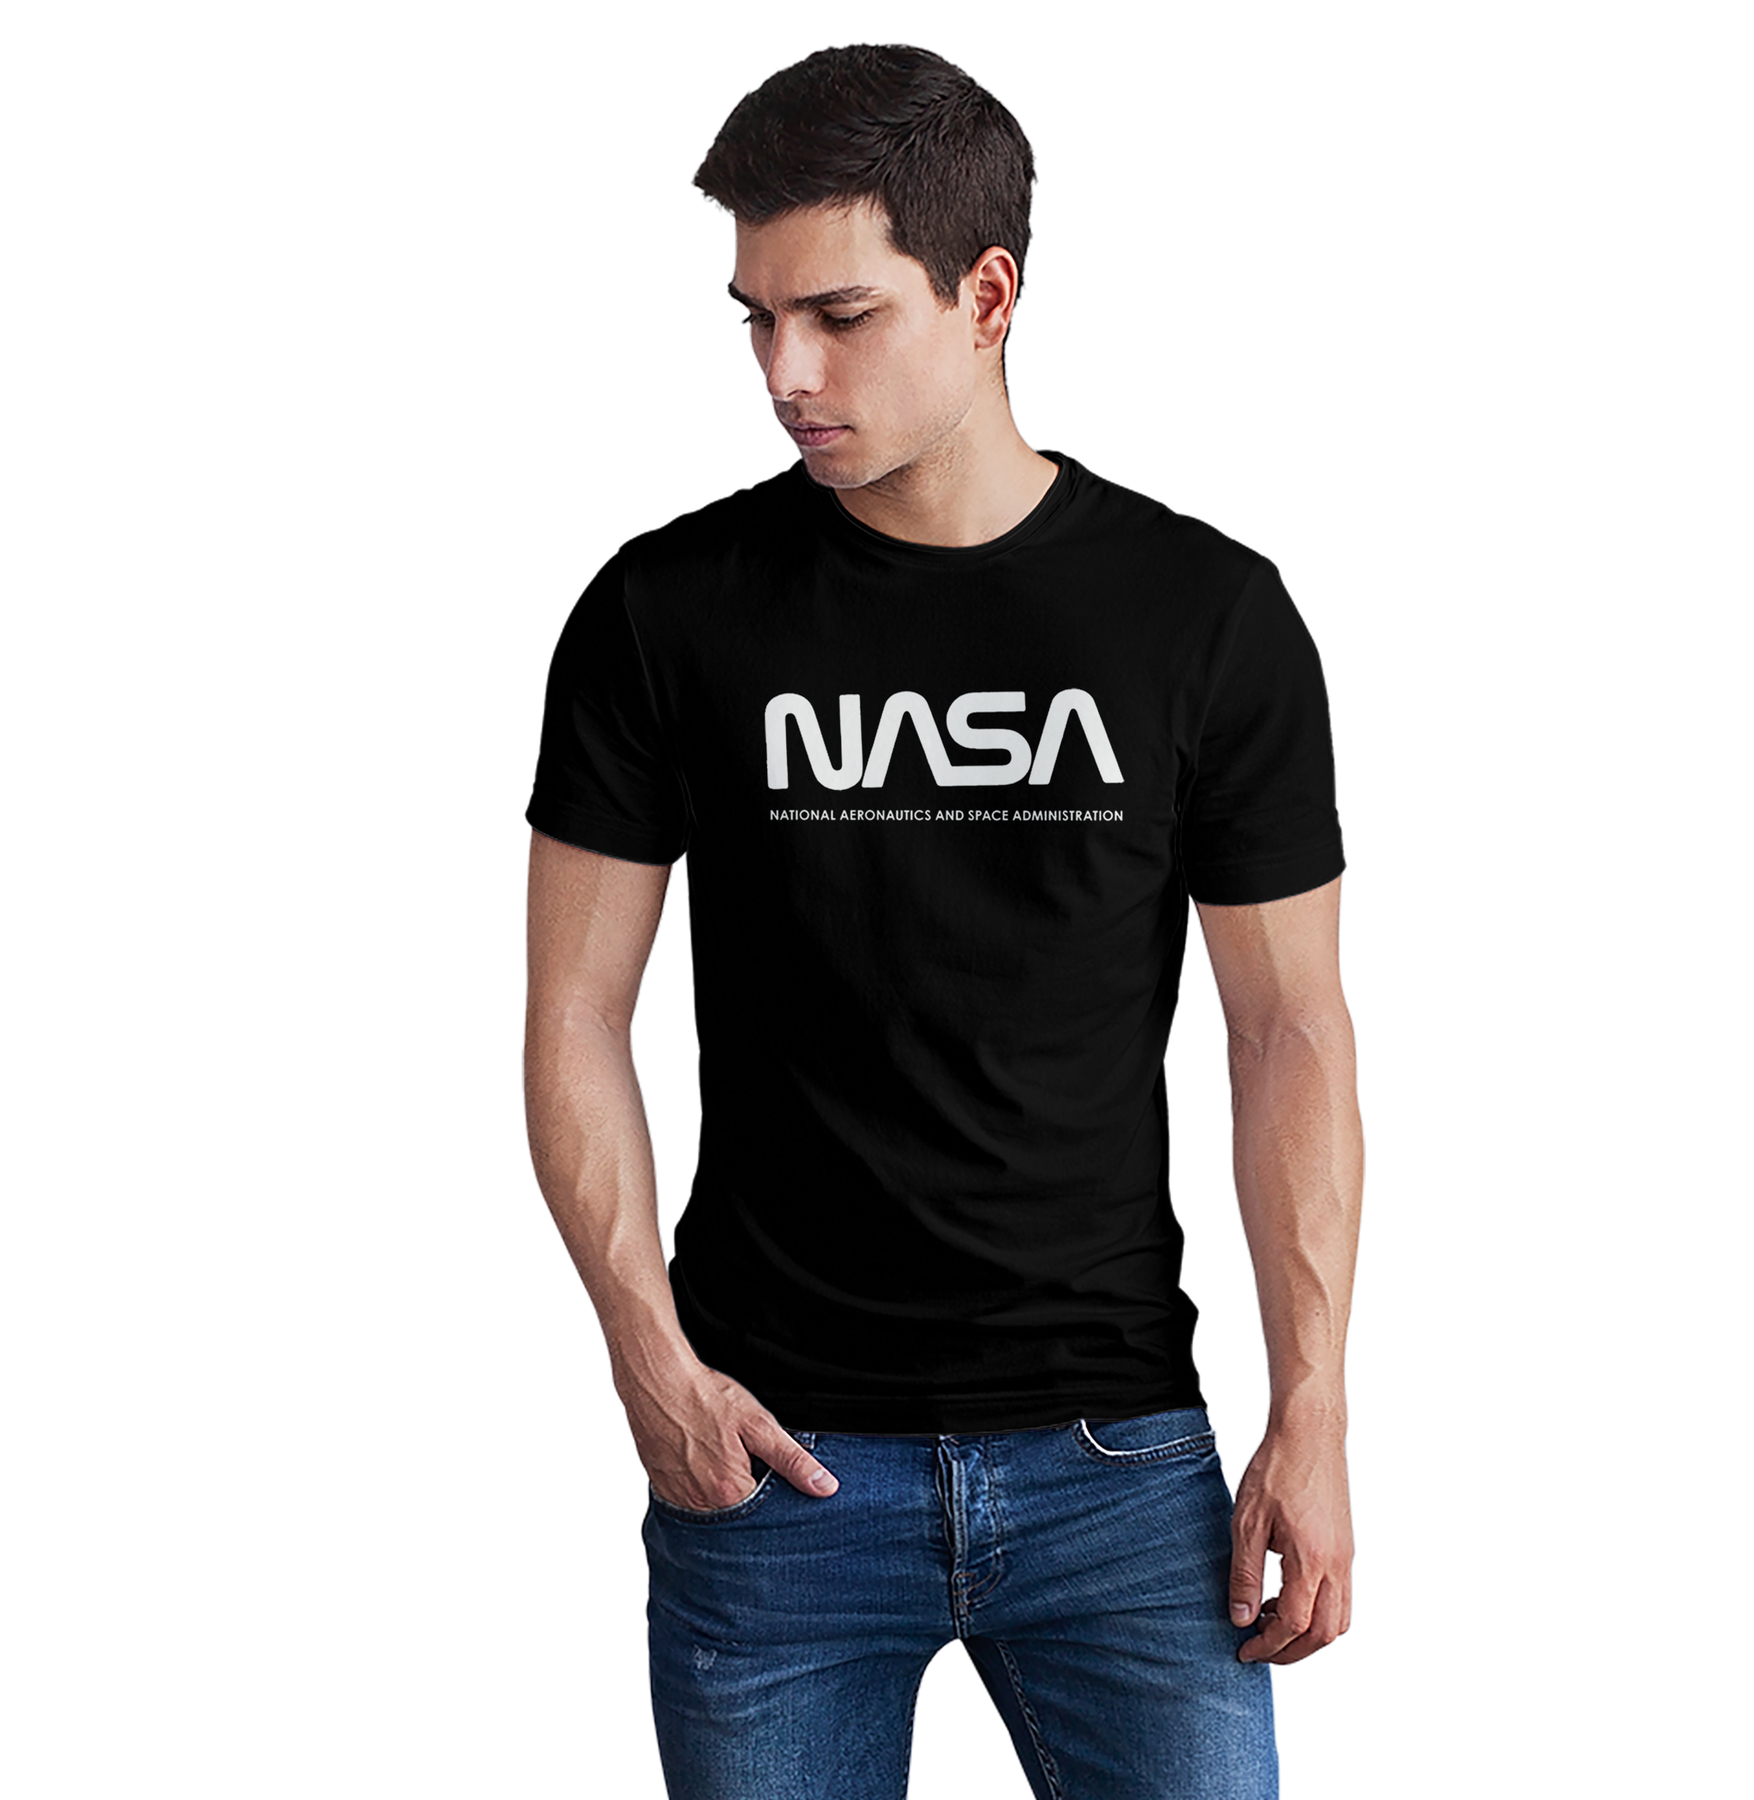 Premium Cotton Men's Black Round Neck T-Shirt - Nasa Collection